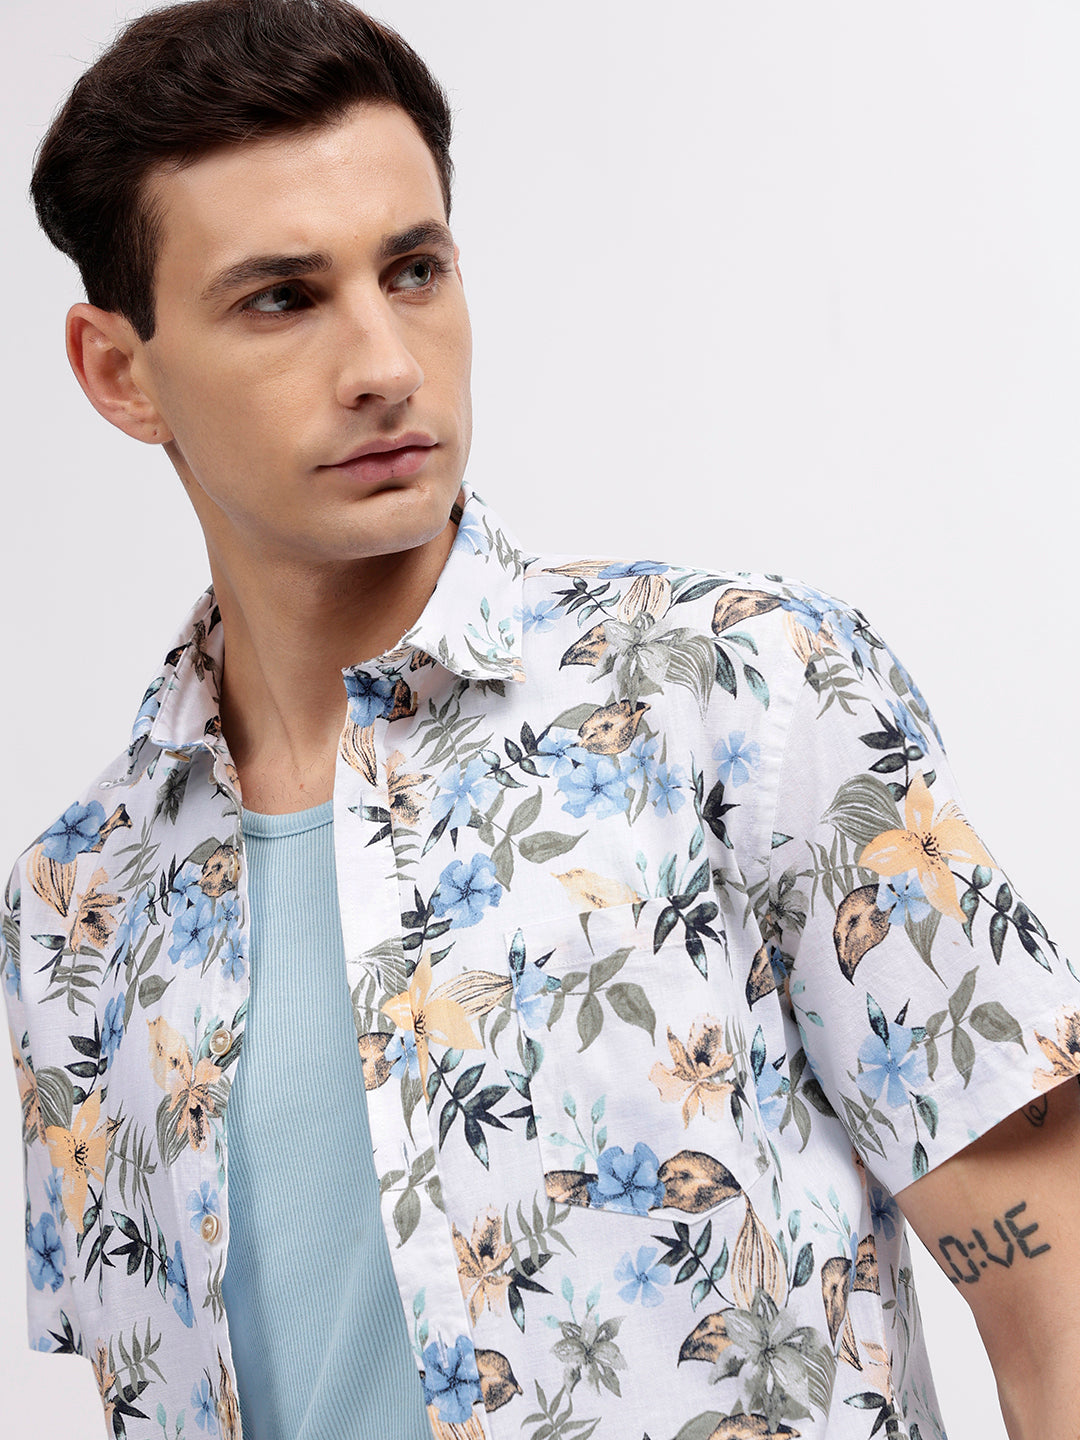 DEZANO Men's Denim Double Pocket Casual Shirt - Sky Blue : Amazon.in:  Clothing & Accessories